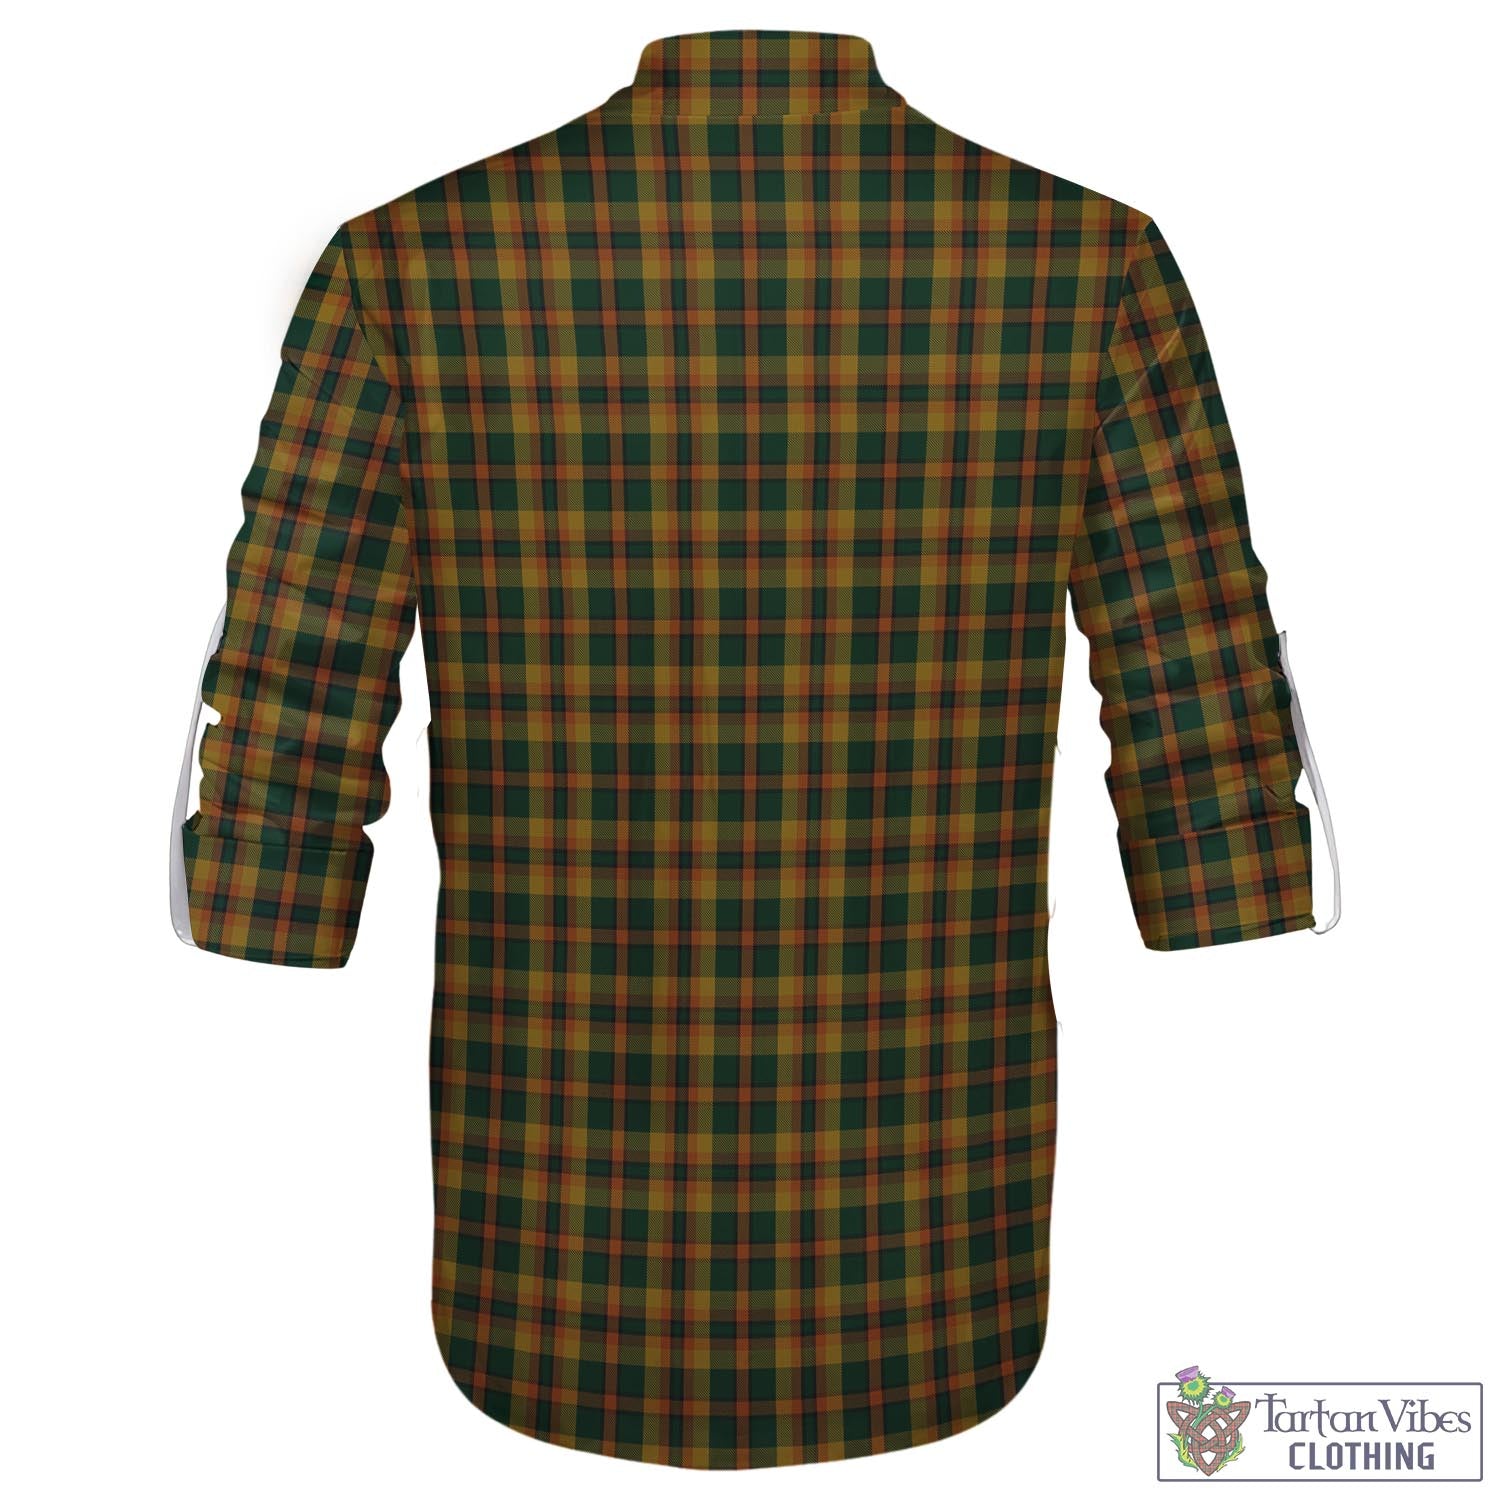 Tartan Vibes Clothing Londonderry (Derry) County Ireland Tartan Men's Scottish Traditional Jacobite Ghillie Kilt Shirt